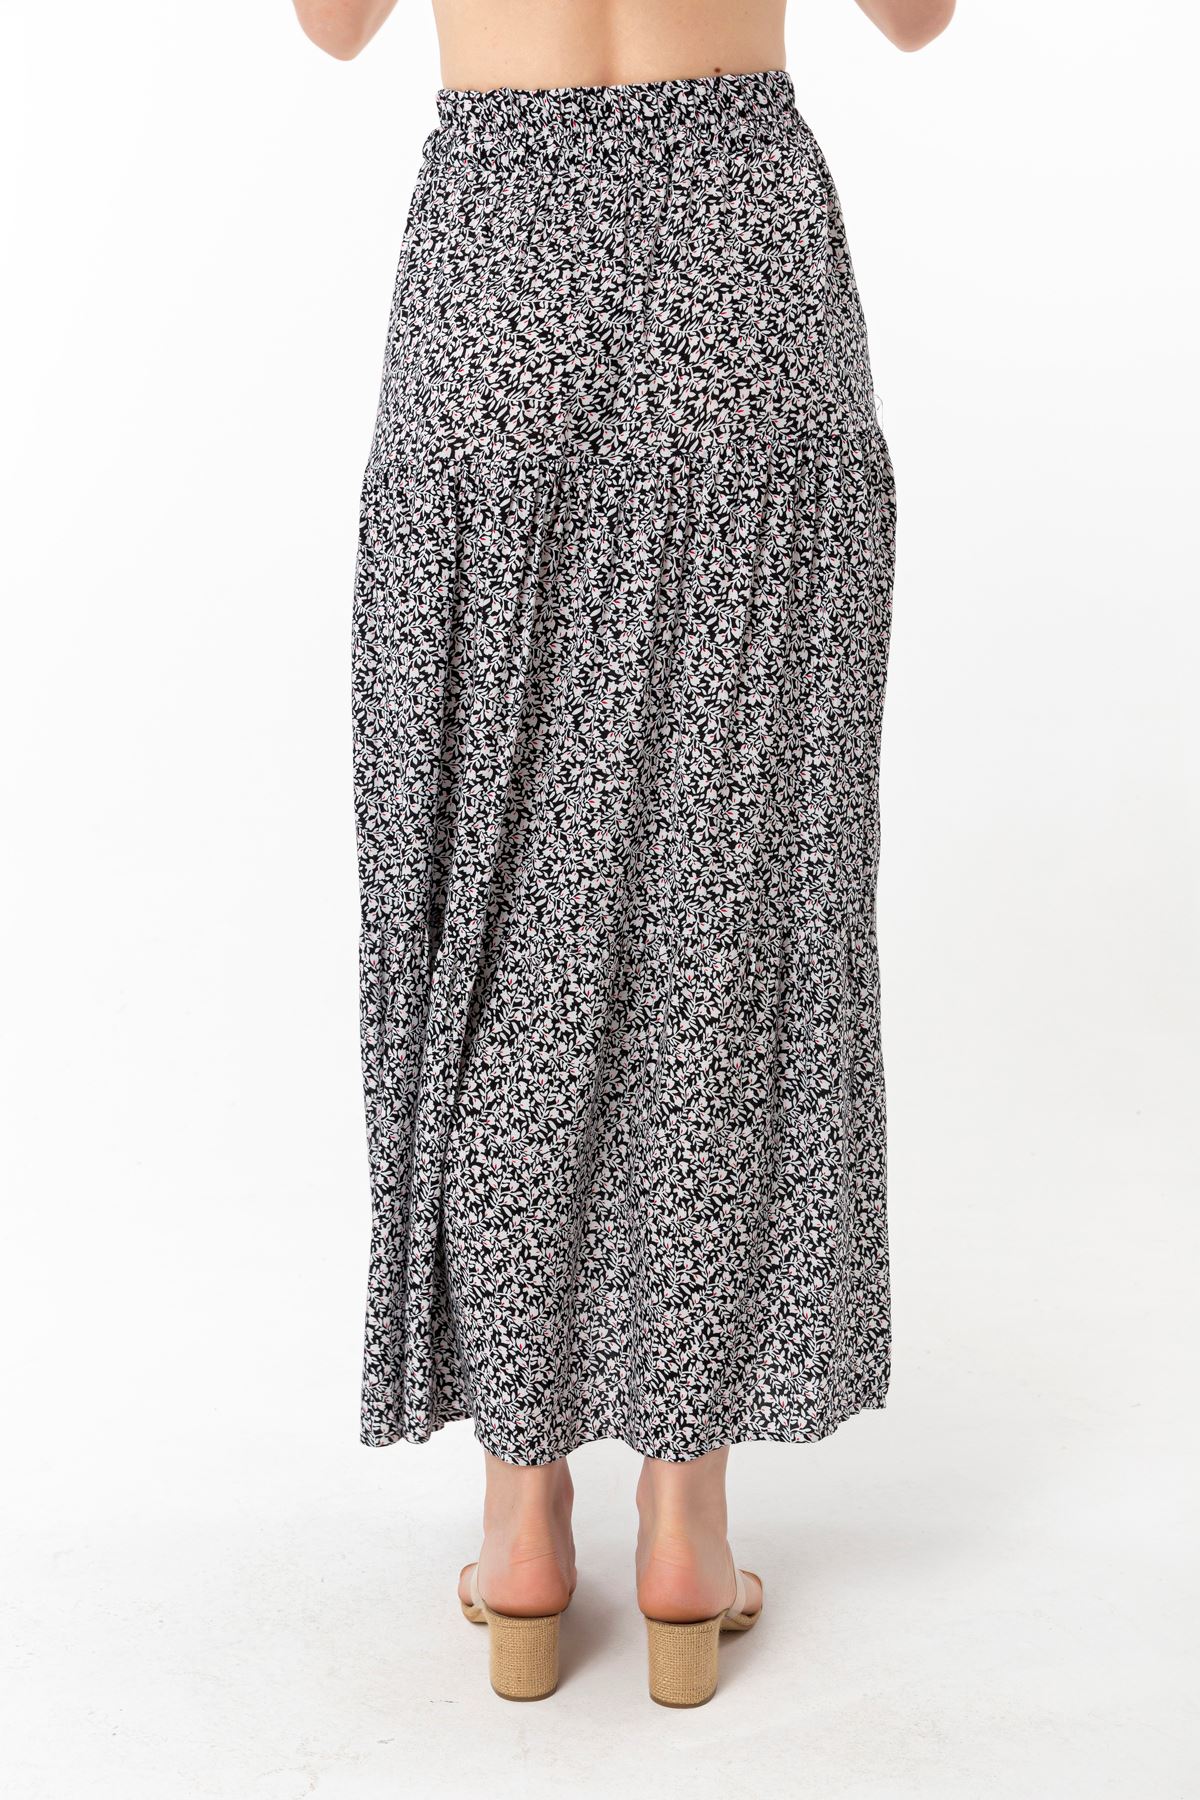 Viscose Fabric Long Comfy Fit Floral Print Women'S Skirt - Black